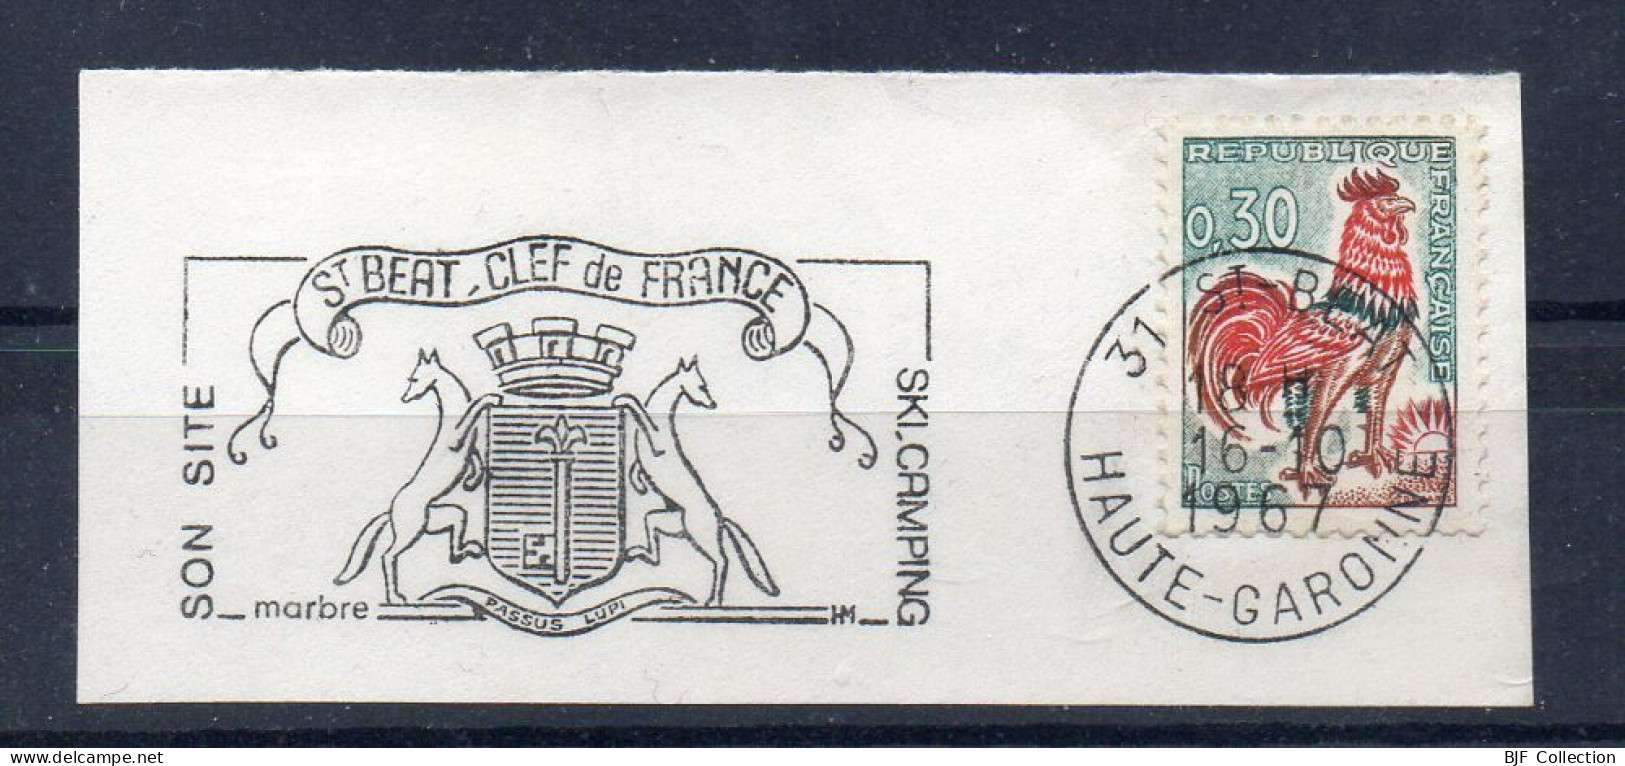 Flamme Illustrée : (31) ST-BEAT – 16/10/1967 (Flamme Sur Fragment) - Mechanical Postmarks (Advertisement)